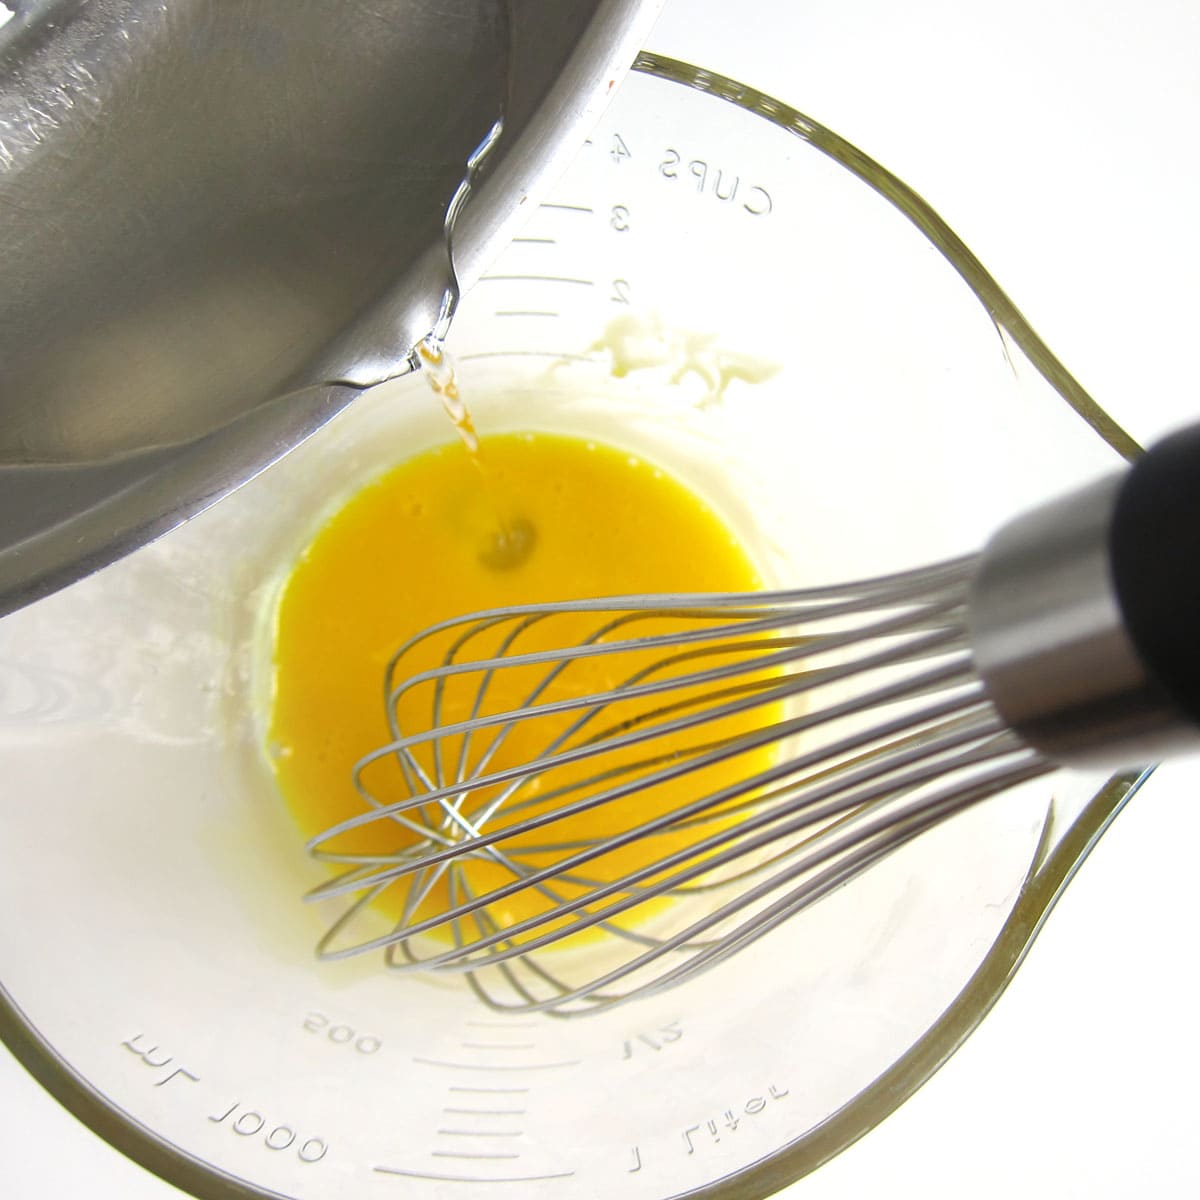 pouring sugar syrup into beaten egg yolks